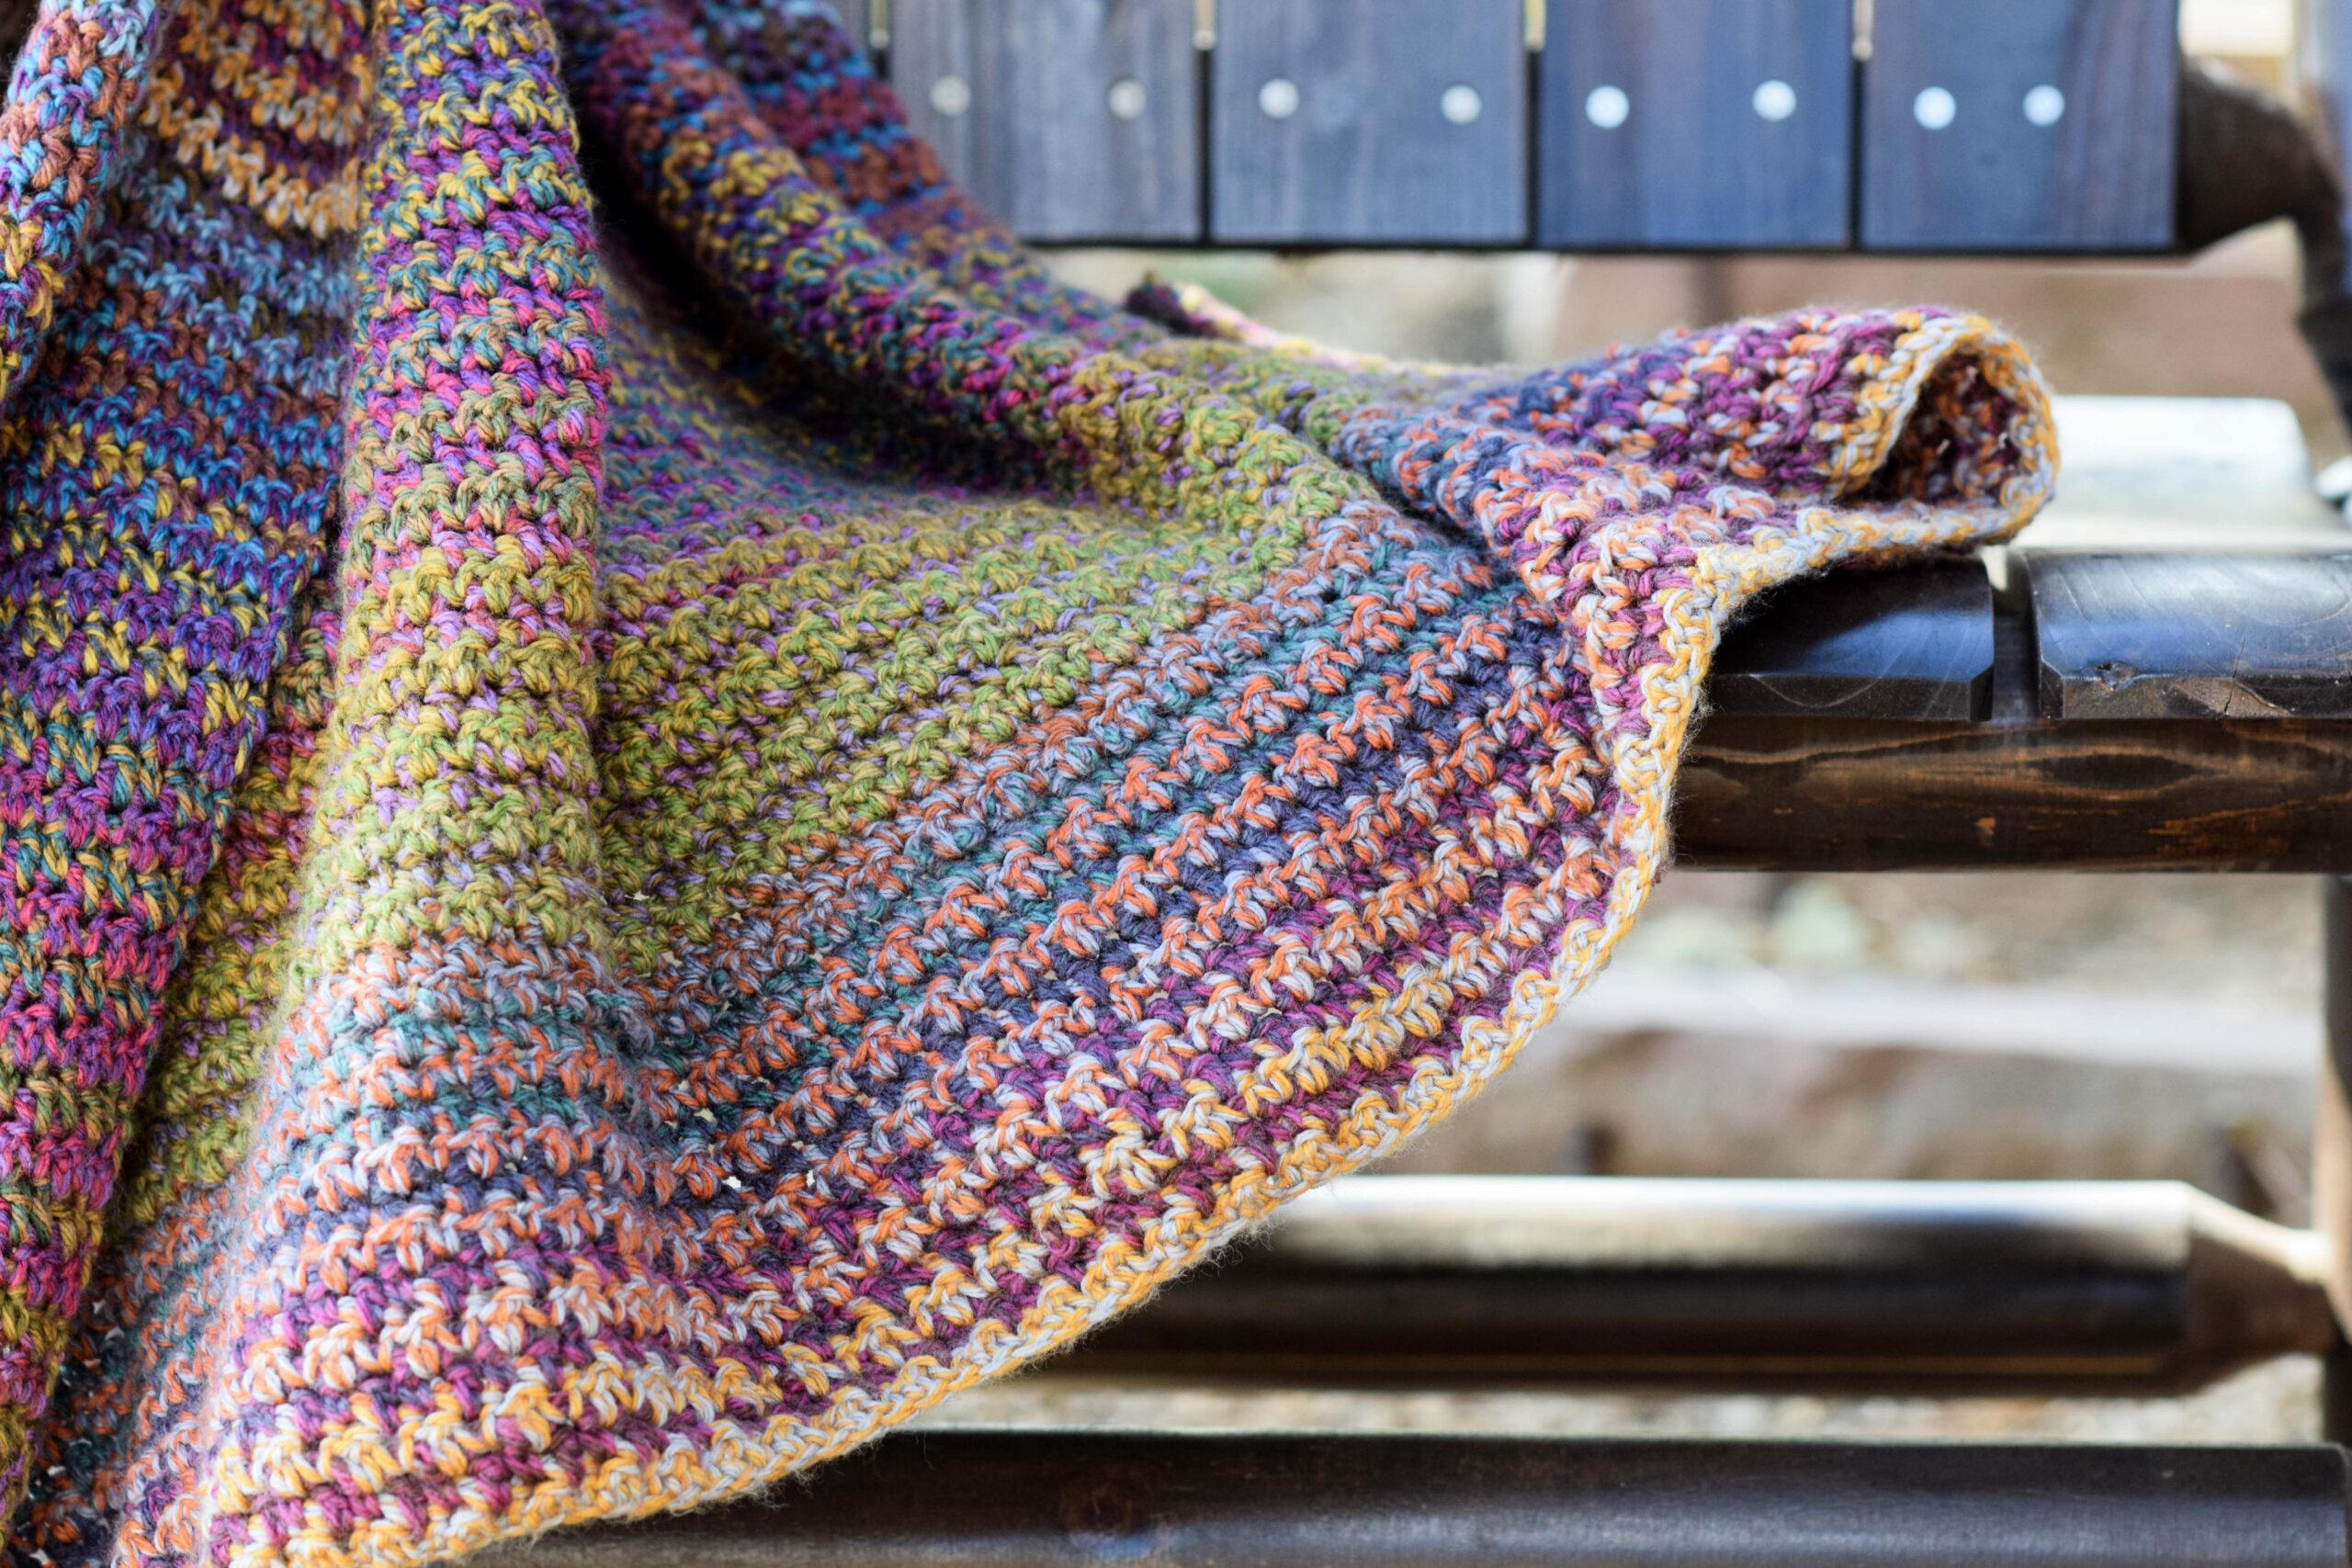 Woodland Houndstooth Crochet Blanket Pattern